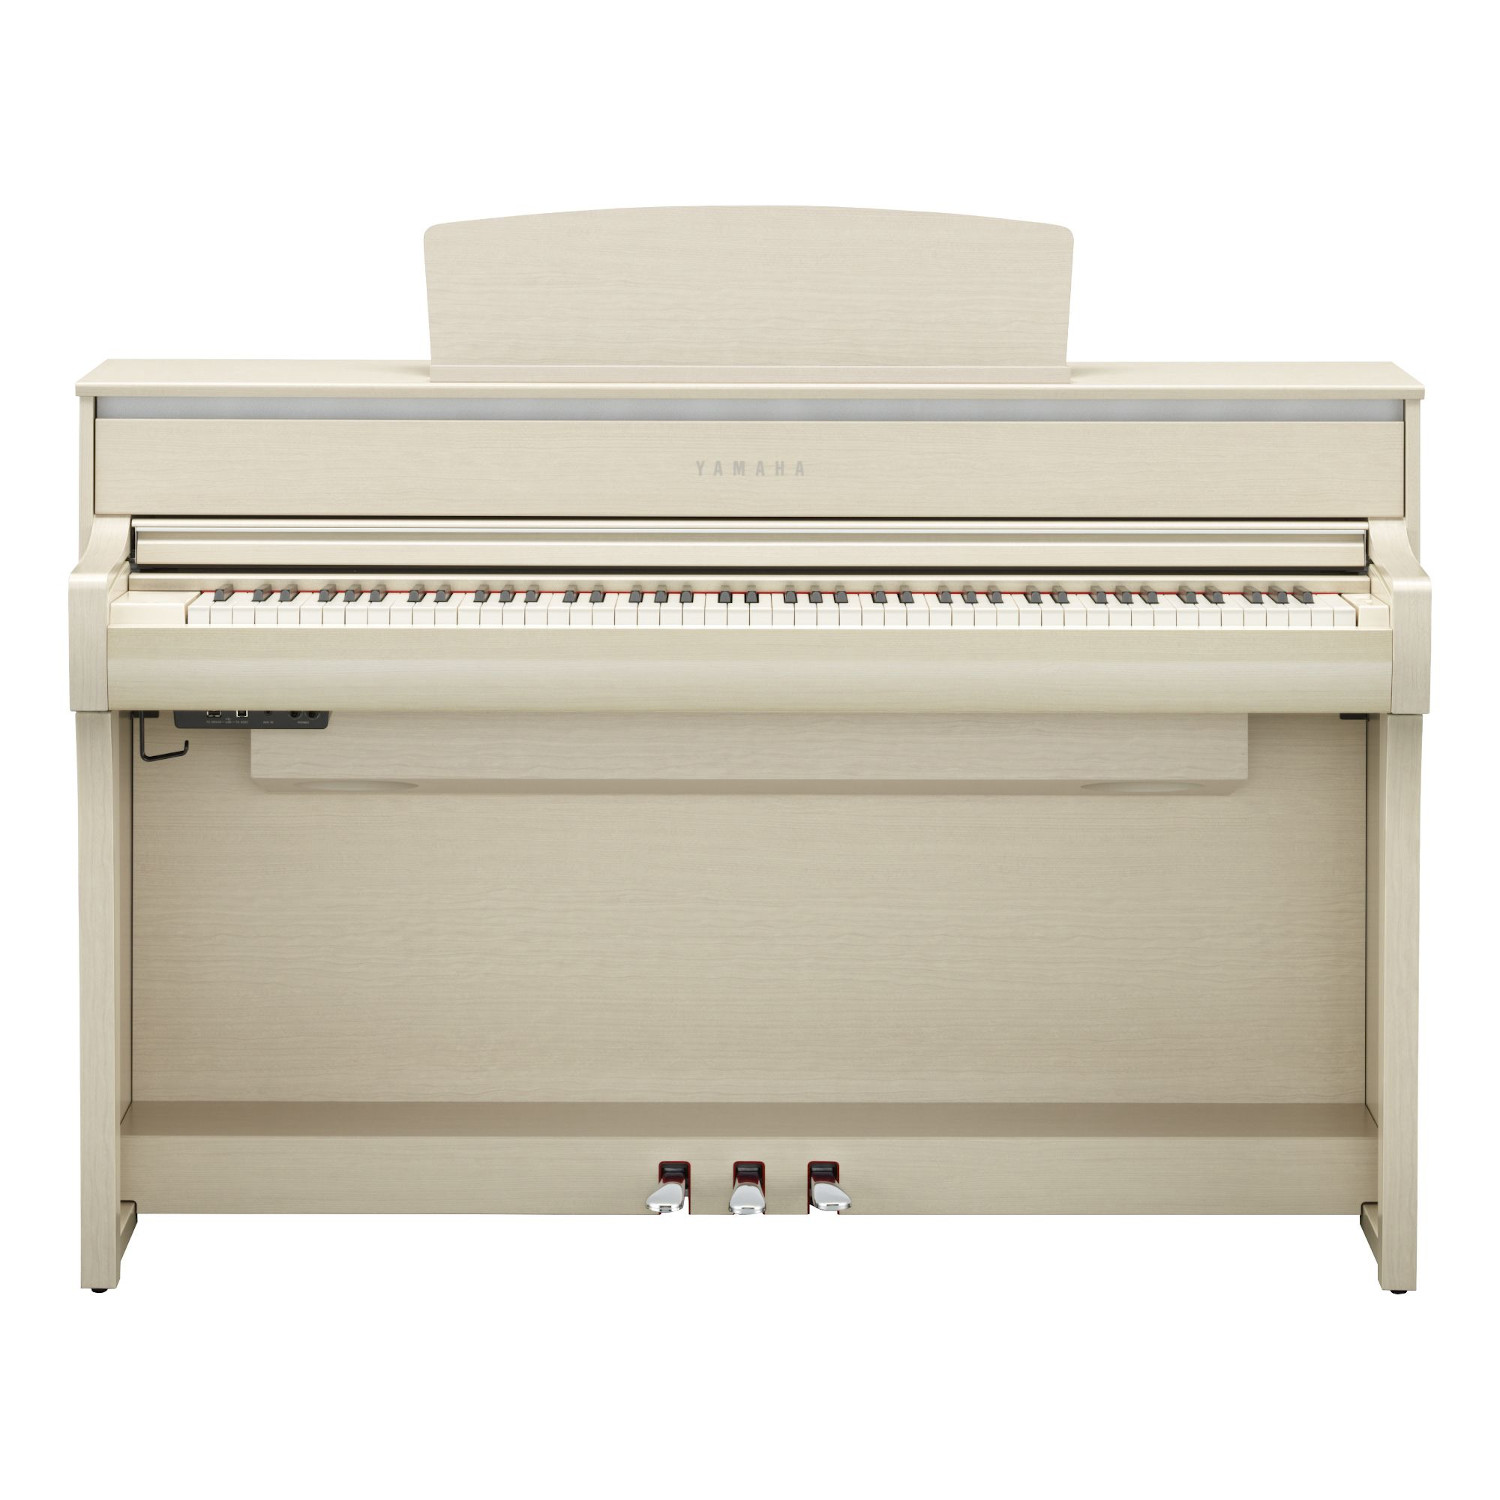 YAMAHA CLAVINOVA CLP775 WHITE ASH PIANOFORTE DIGITALE 88 TASTI PESATI COLORE BIANCO CENERE 1